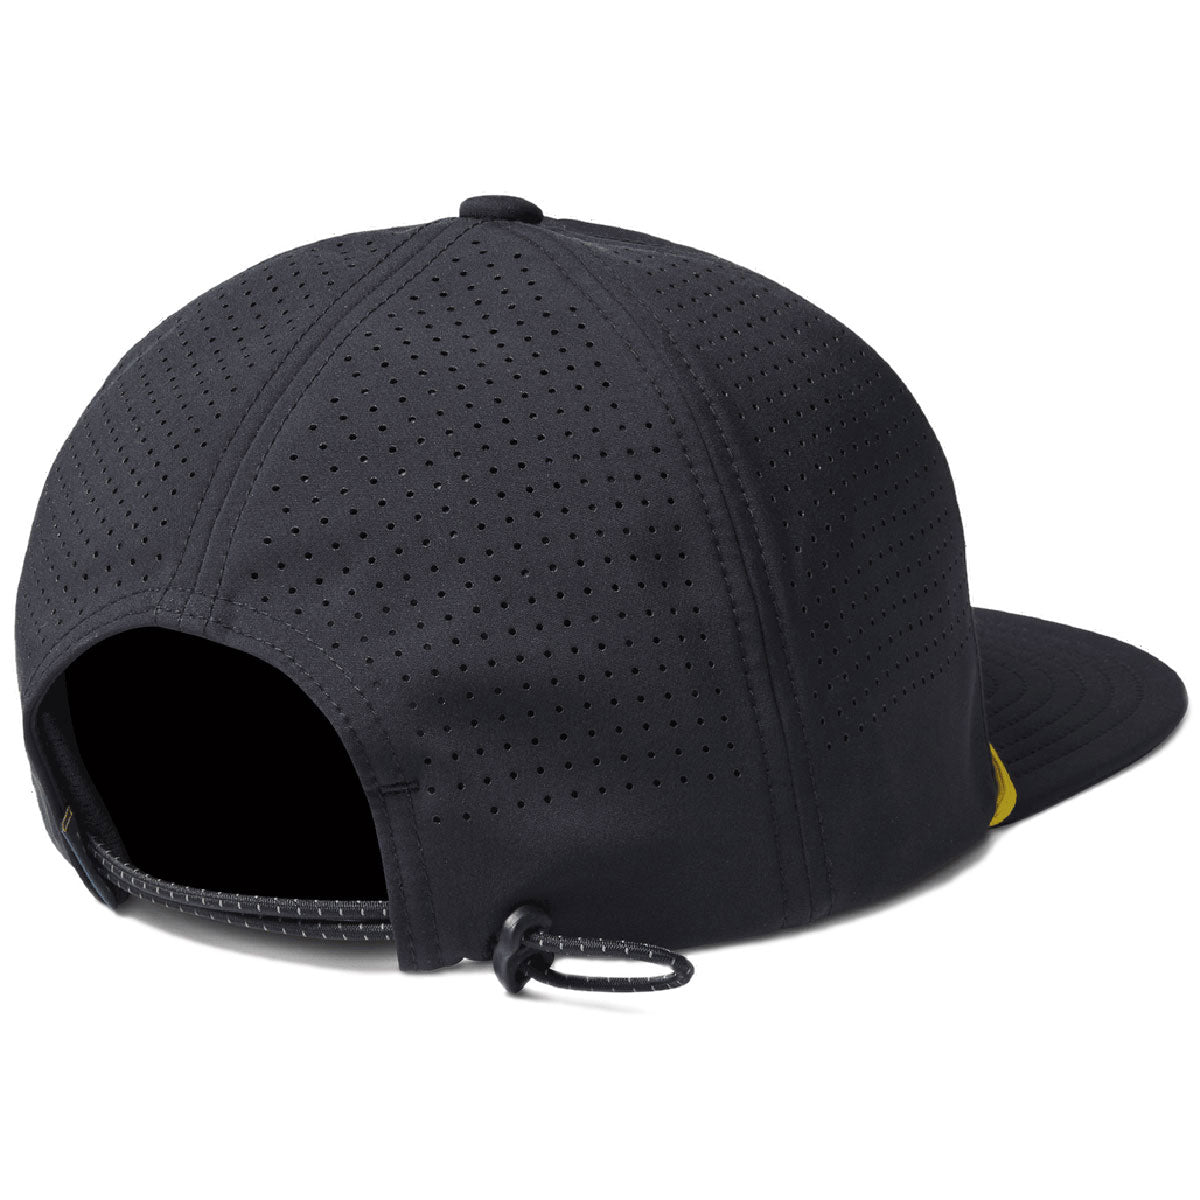 Roark Hybro Hat - Black image 2